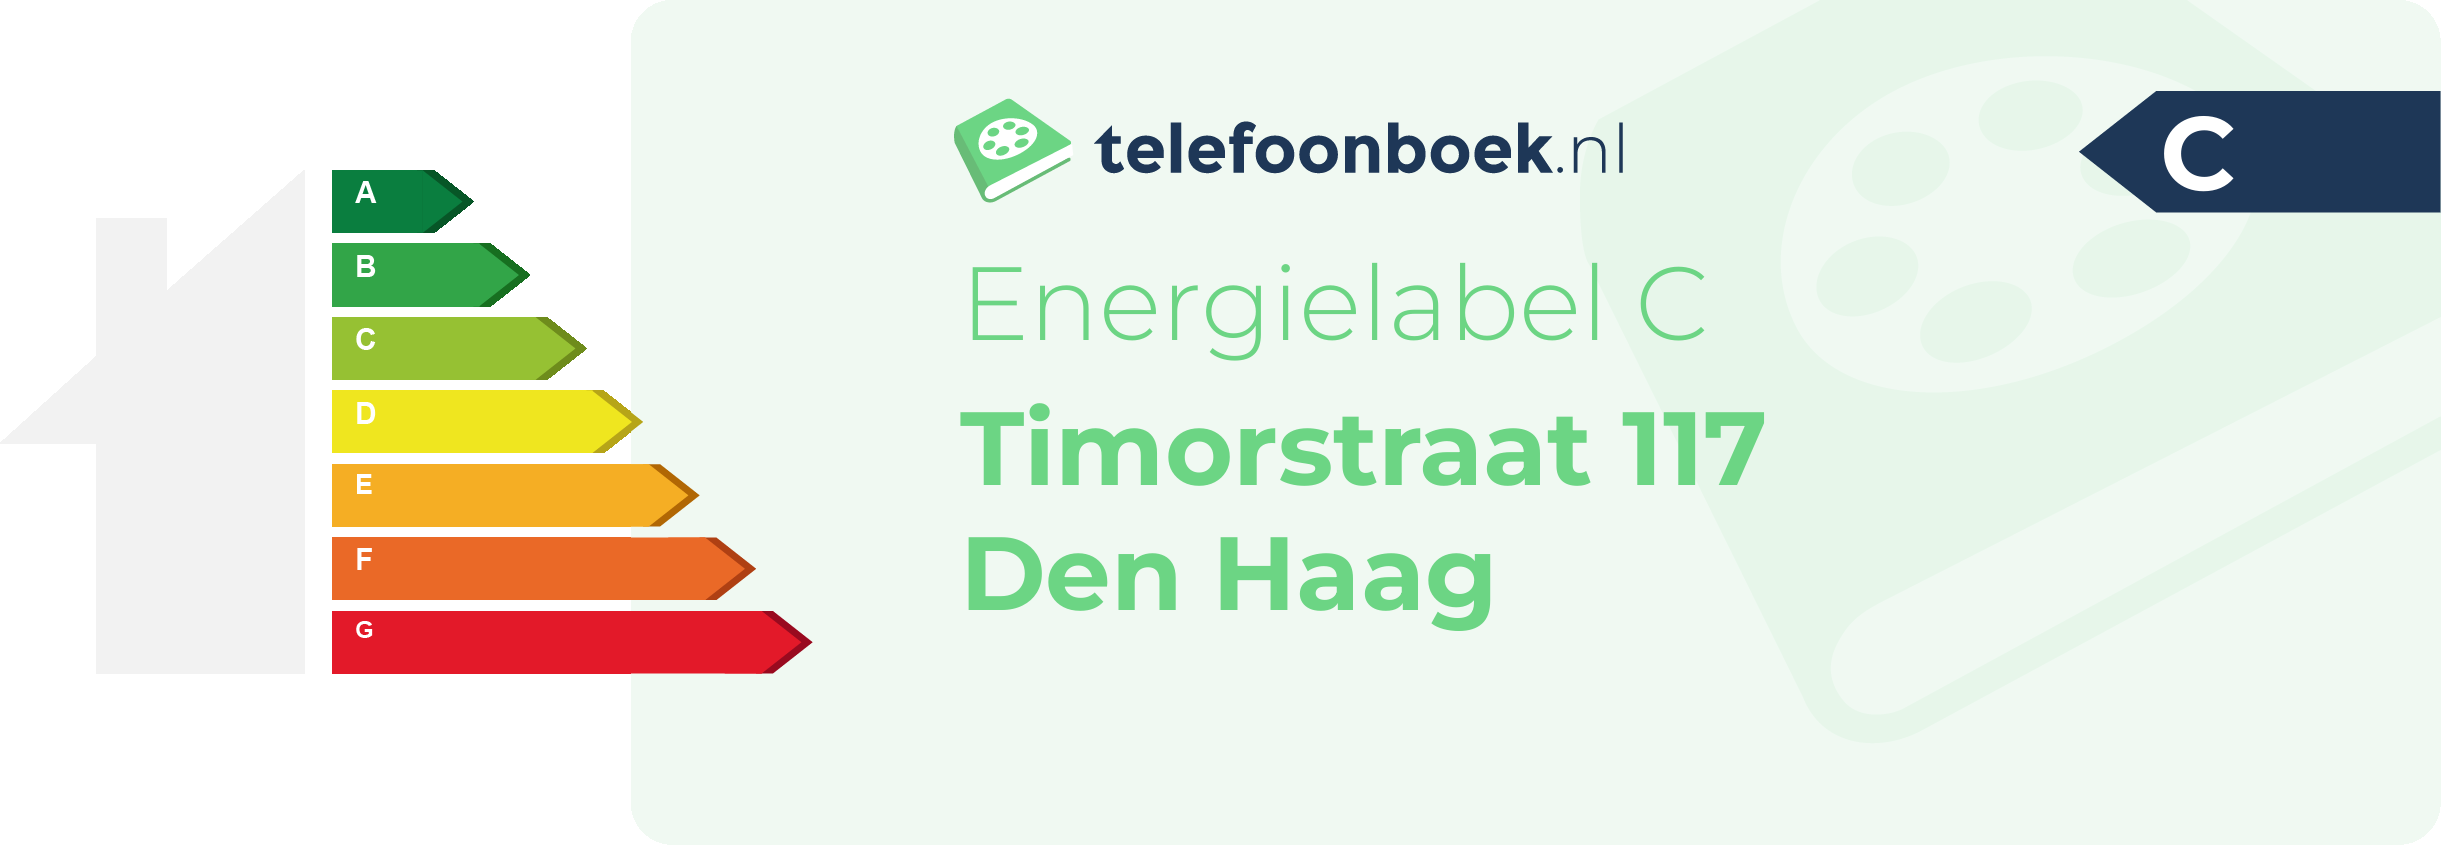 Energielabel Timorstraat 117 Den Haag